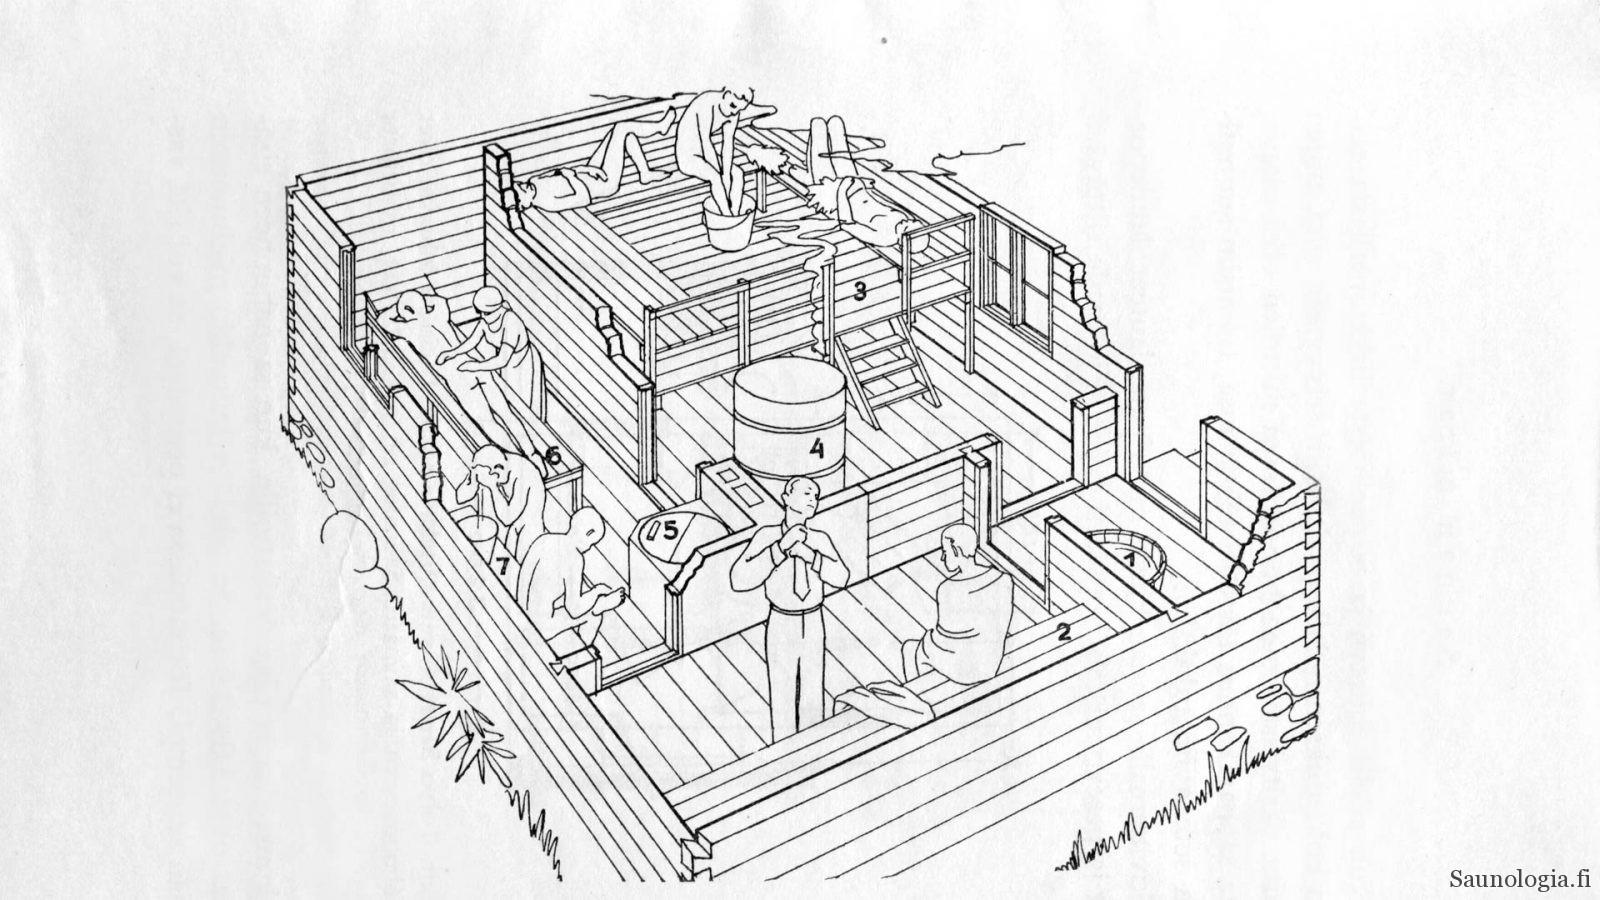 1955-Viherjuuri-Sauna-läpileikkaus